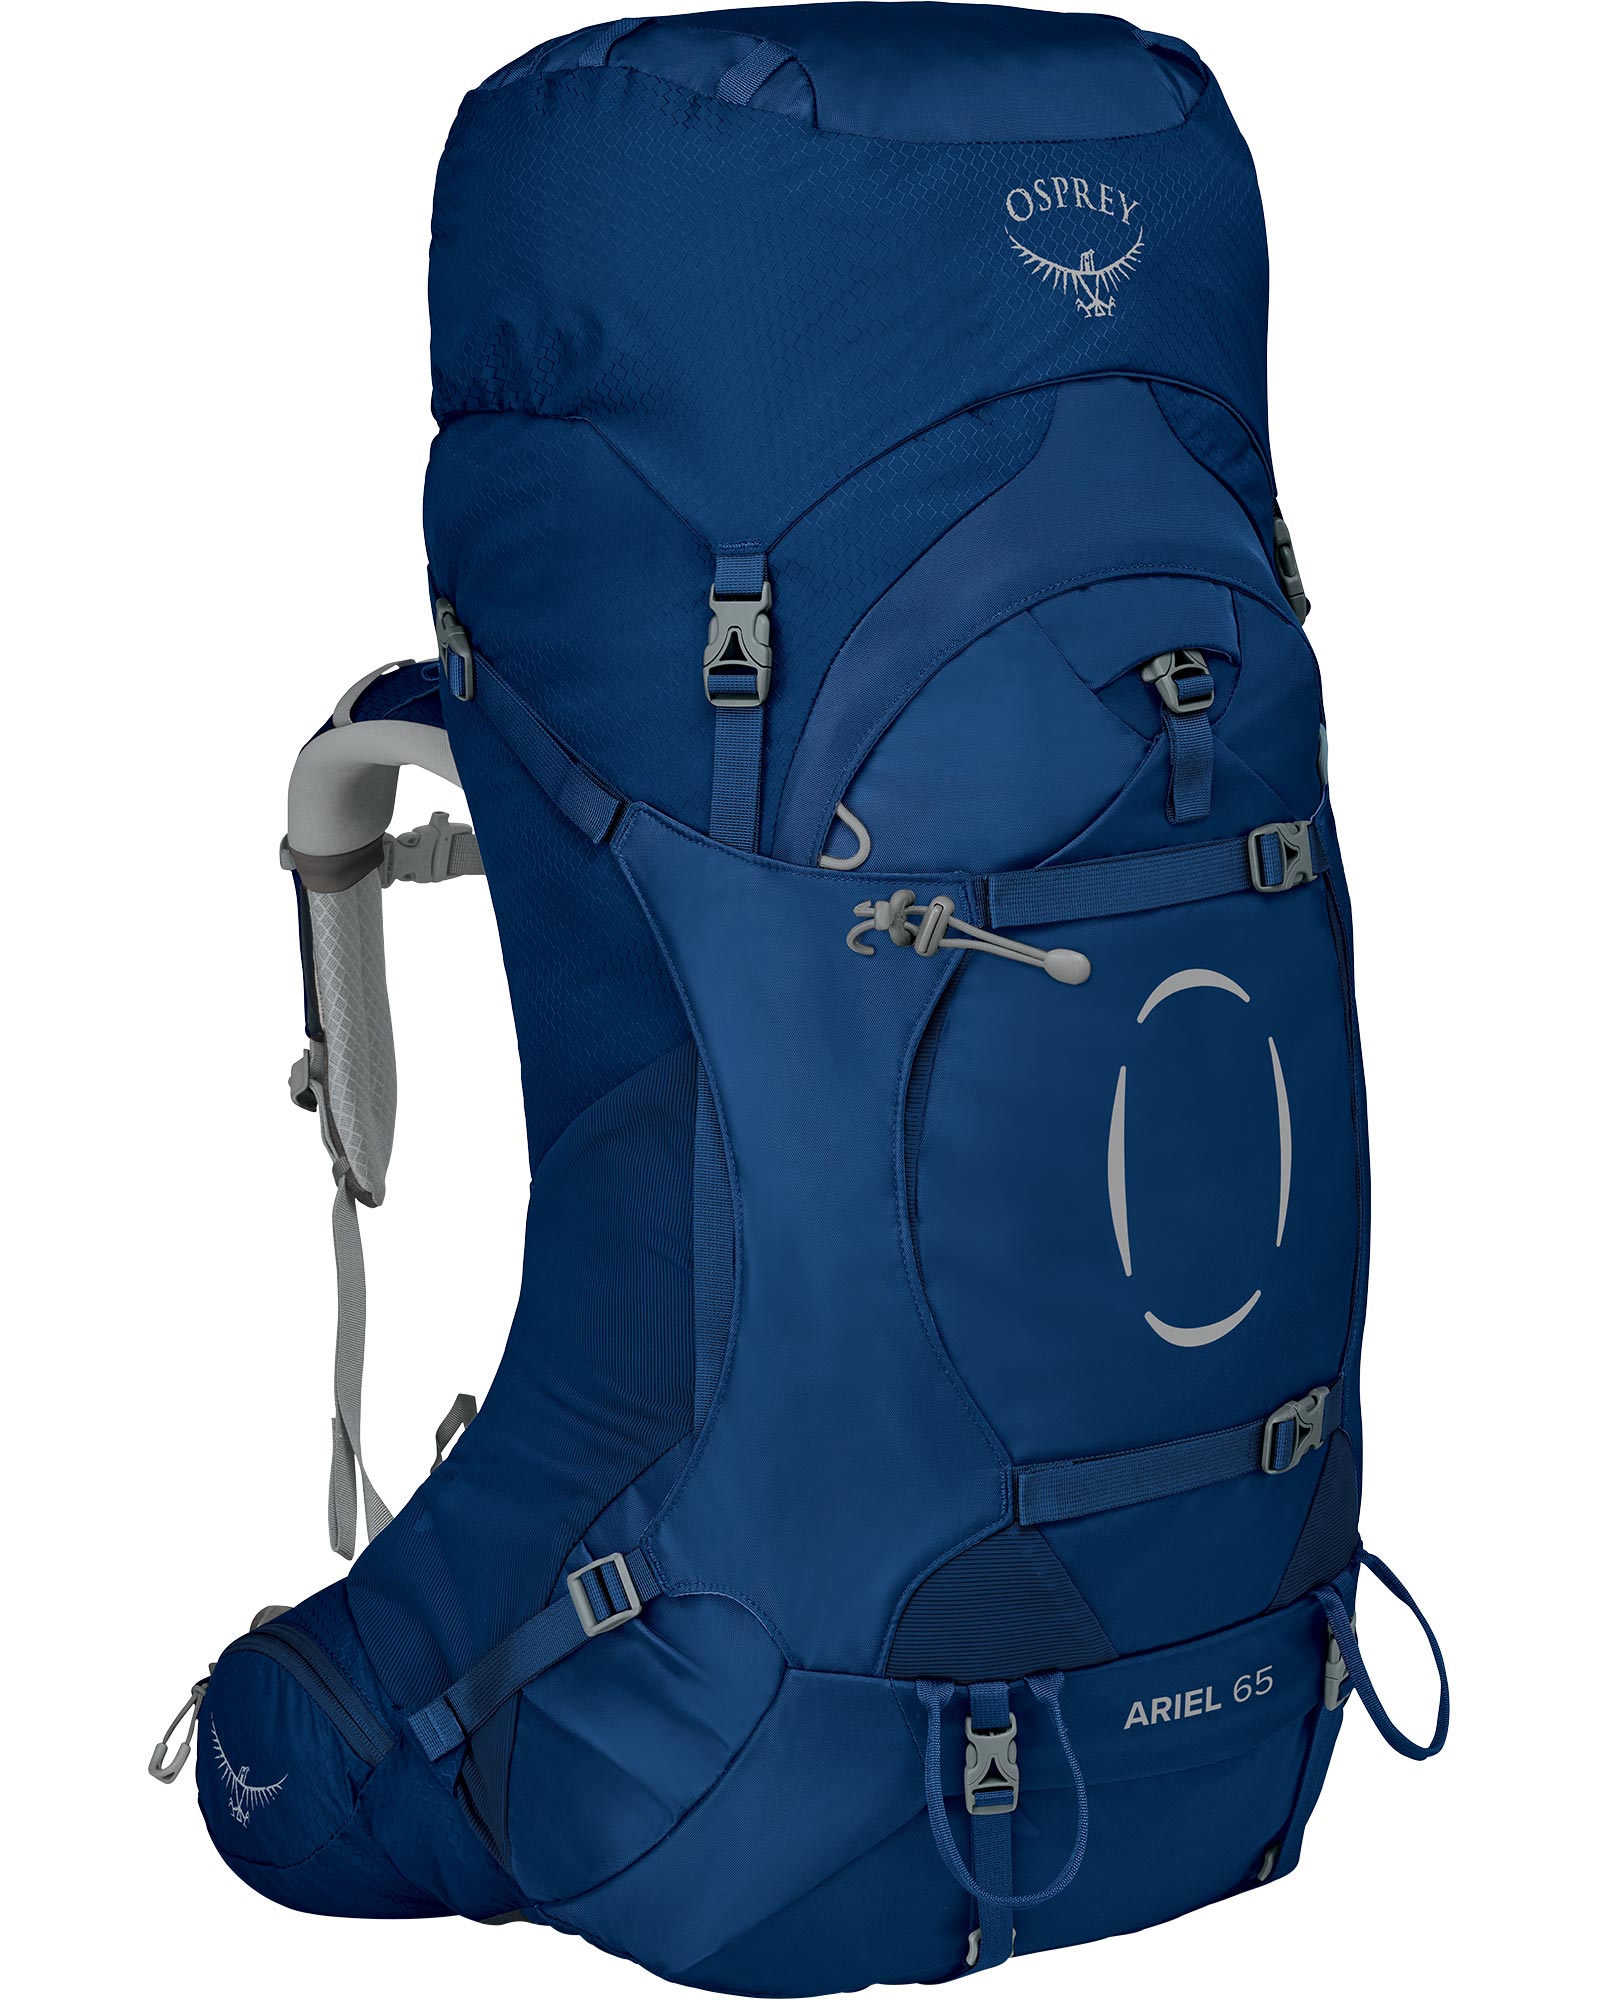 Osprey Ariel 65 Women’s Backpack - Ceramic Blue XS/S